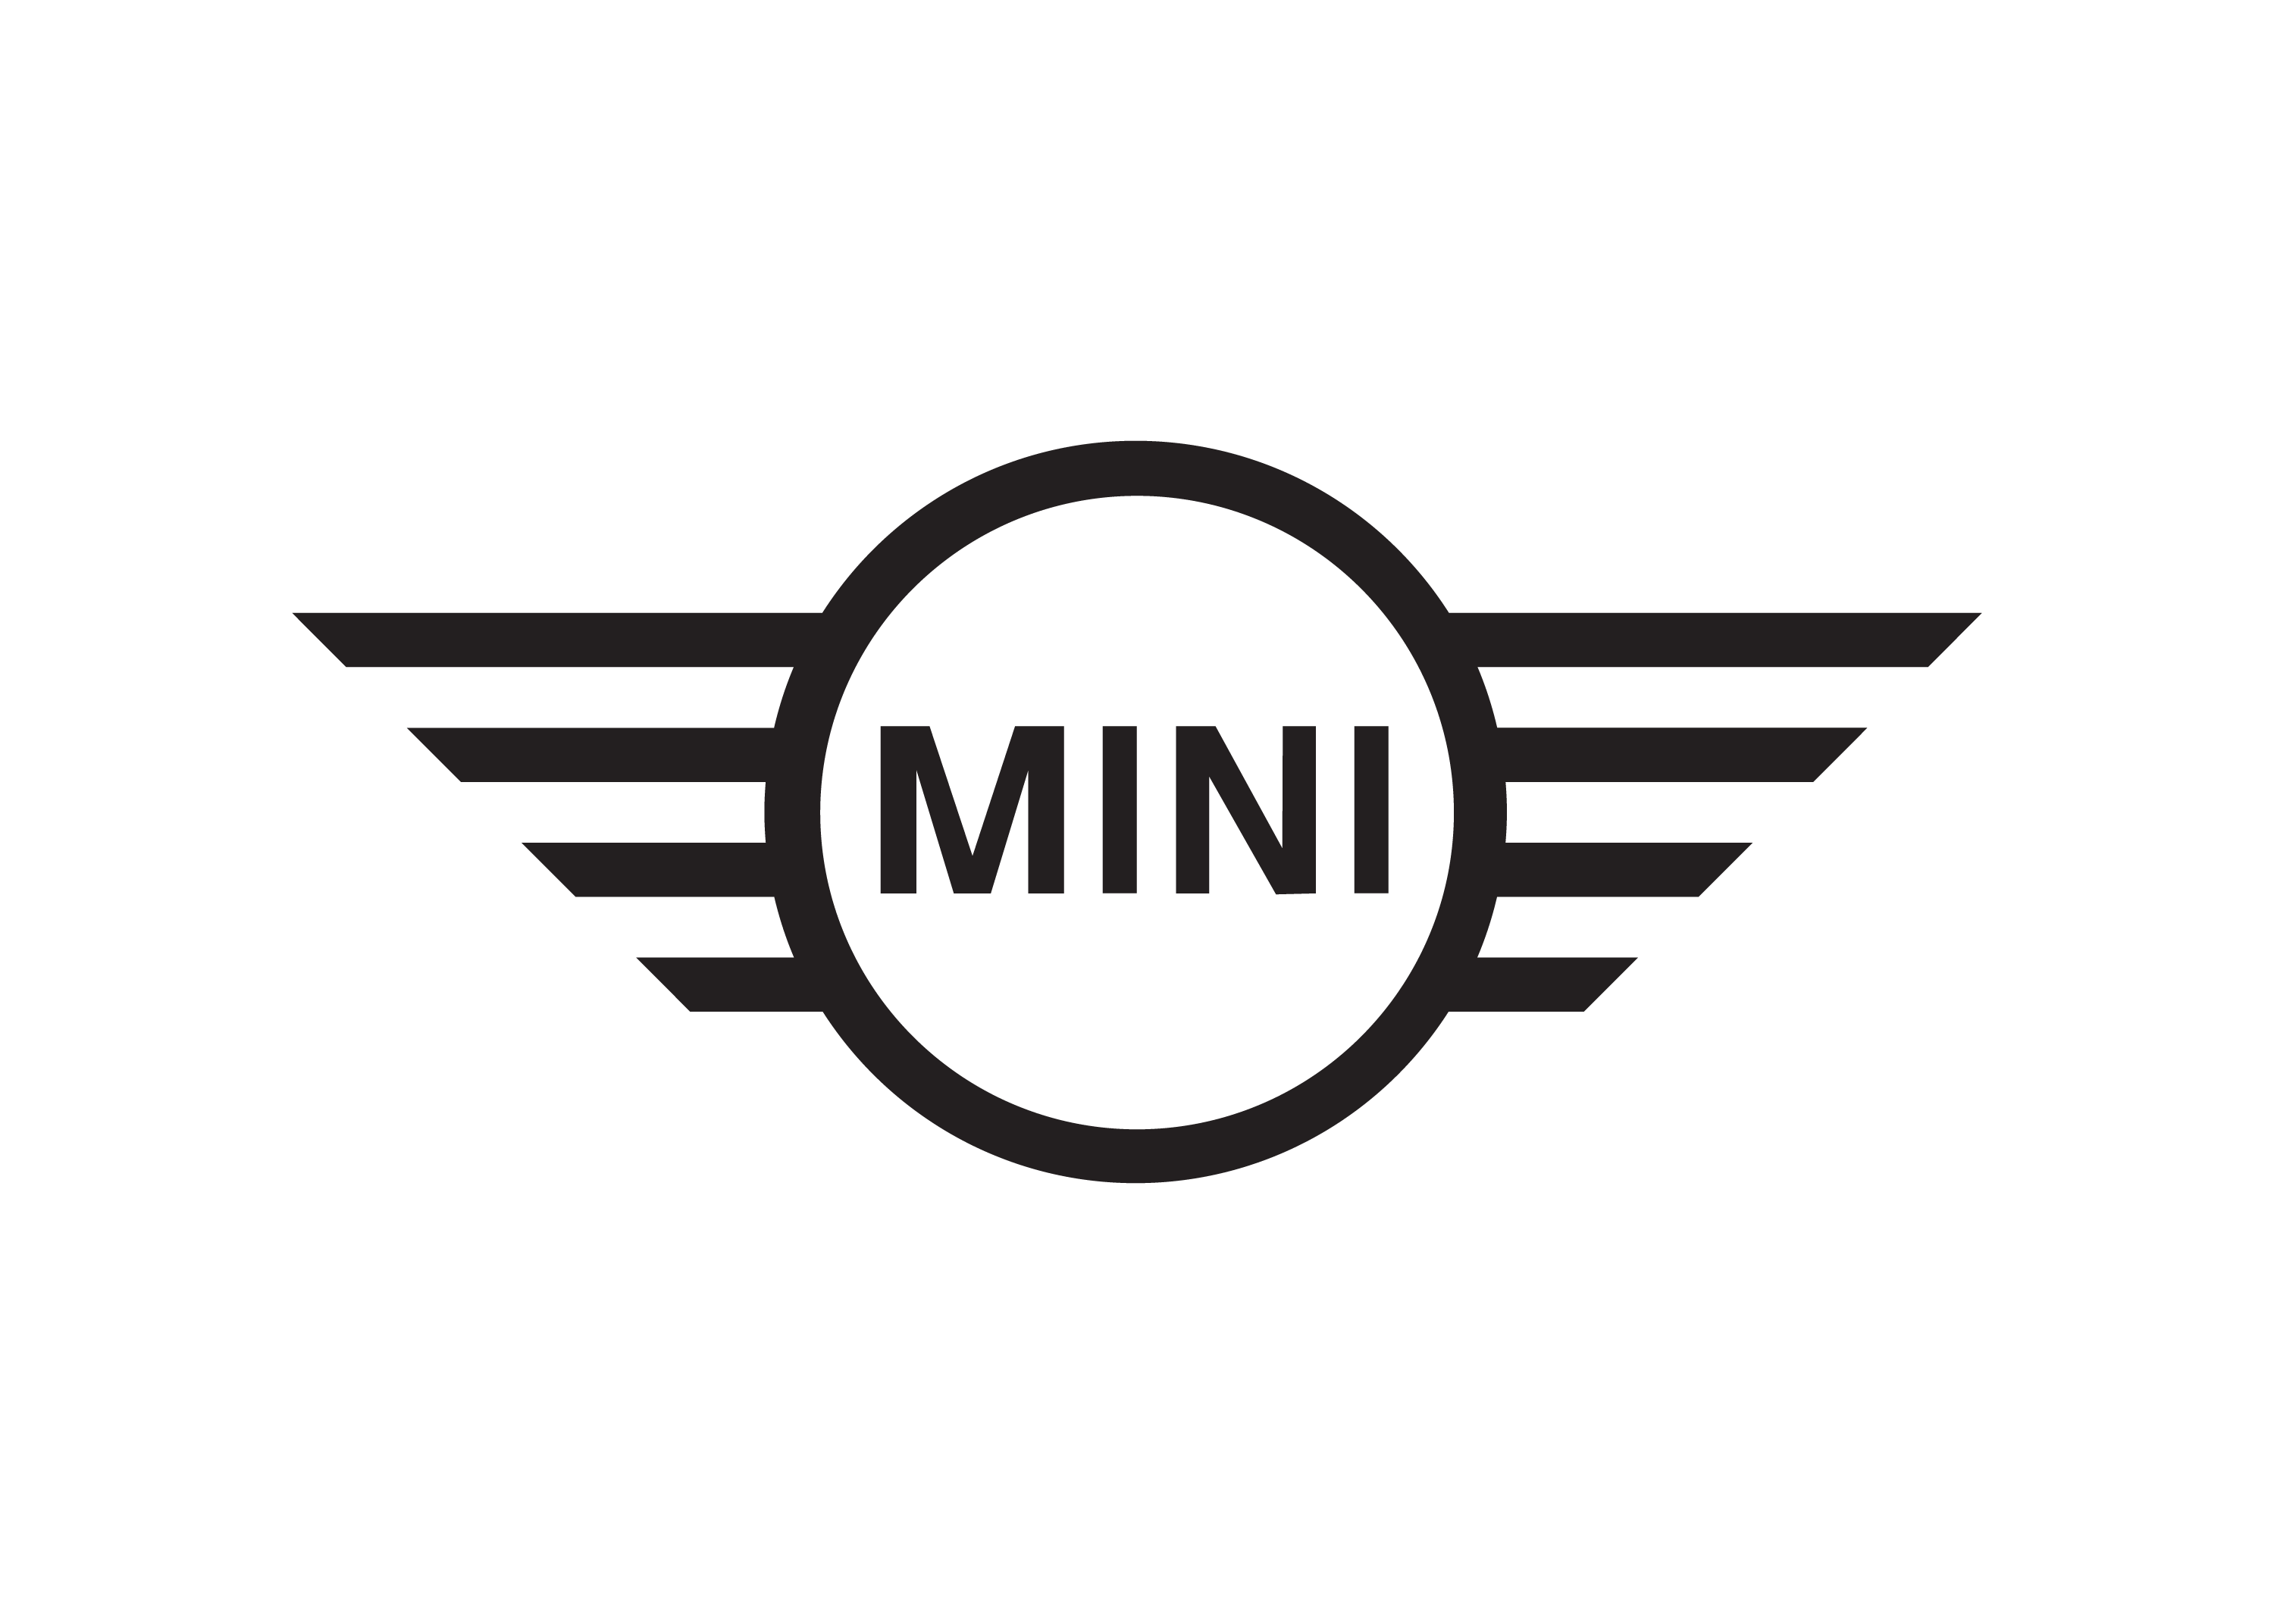 png-transparent-mini-cooper-mini-clubman-bmw-car-mini-text-trademark-logo-thumbnail